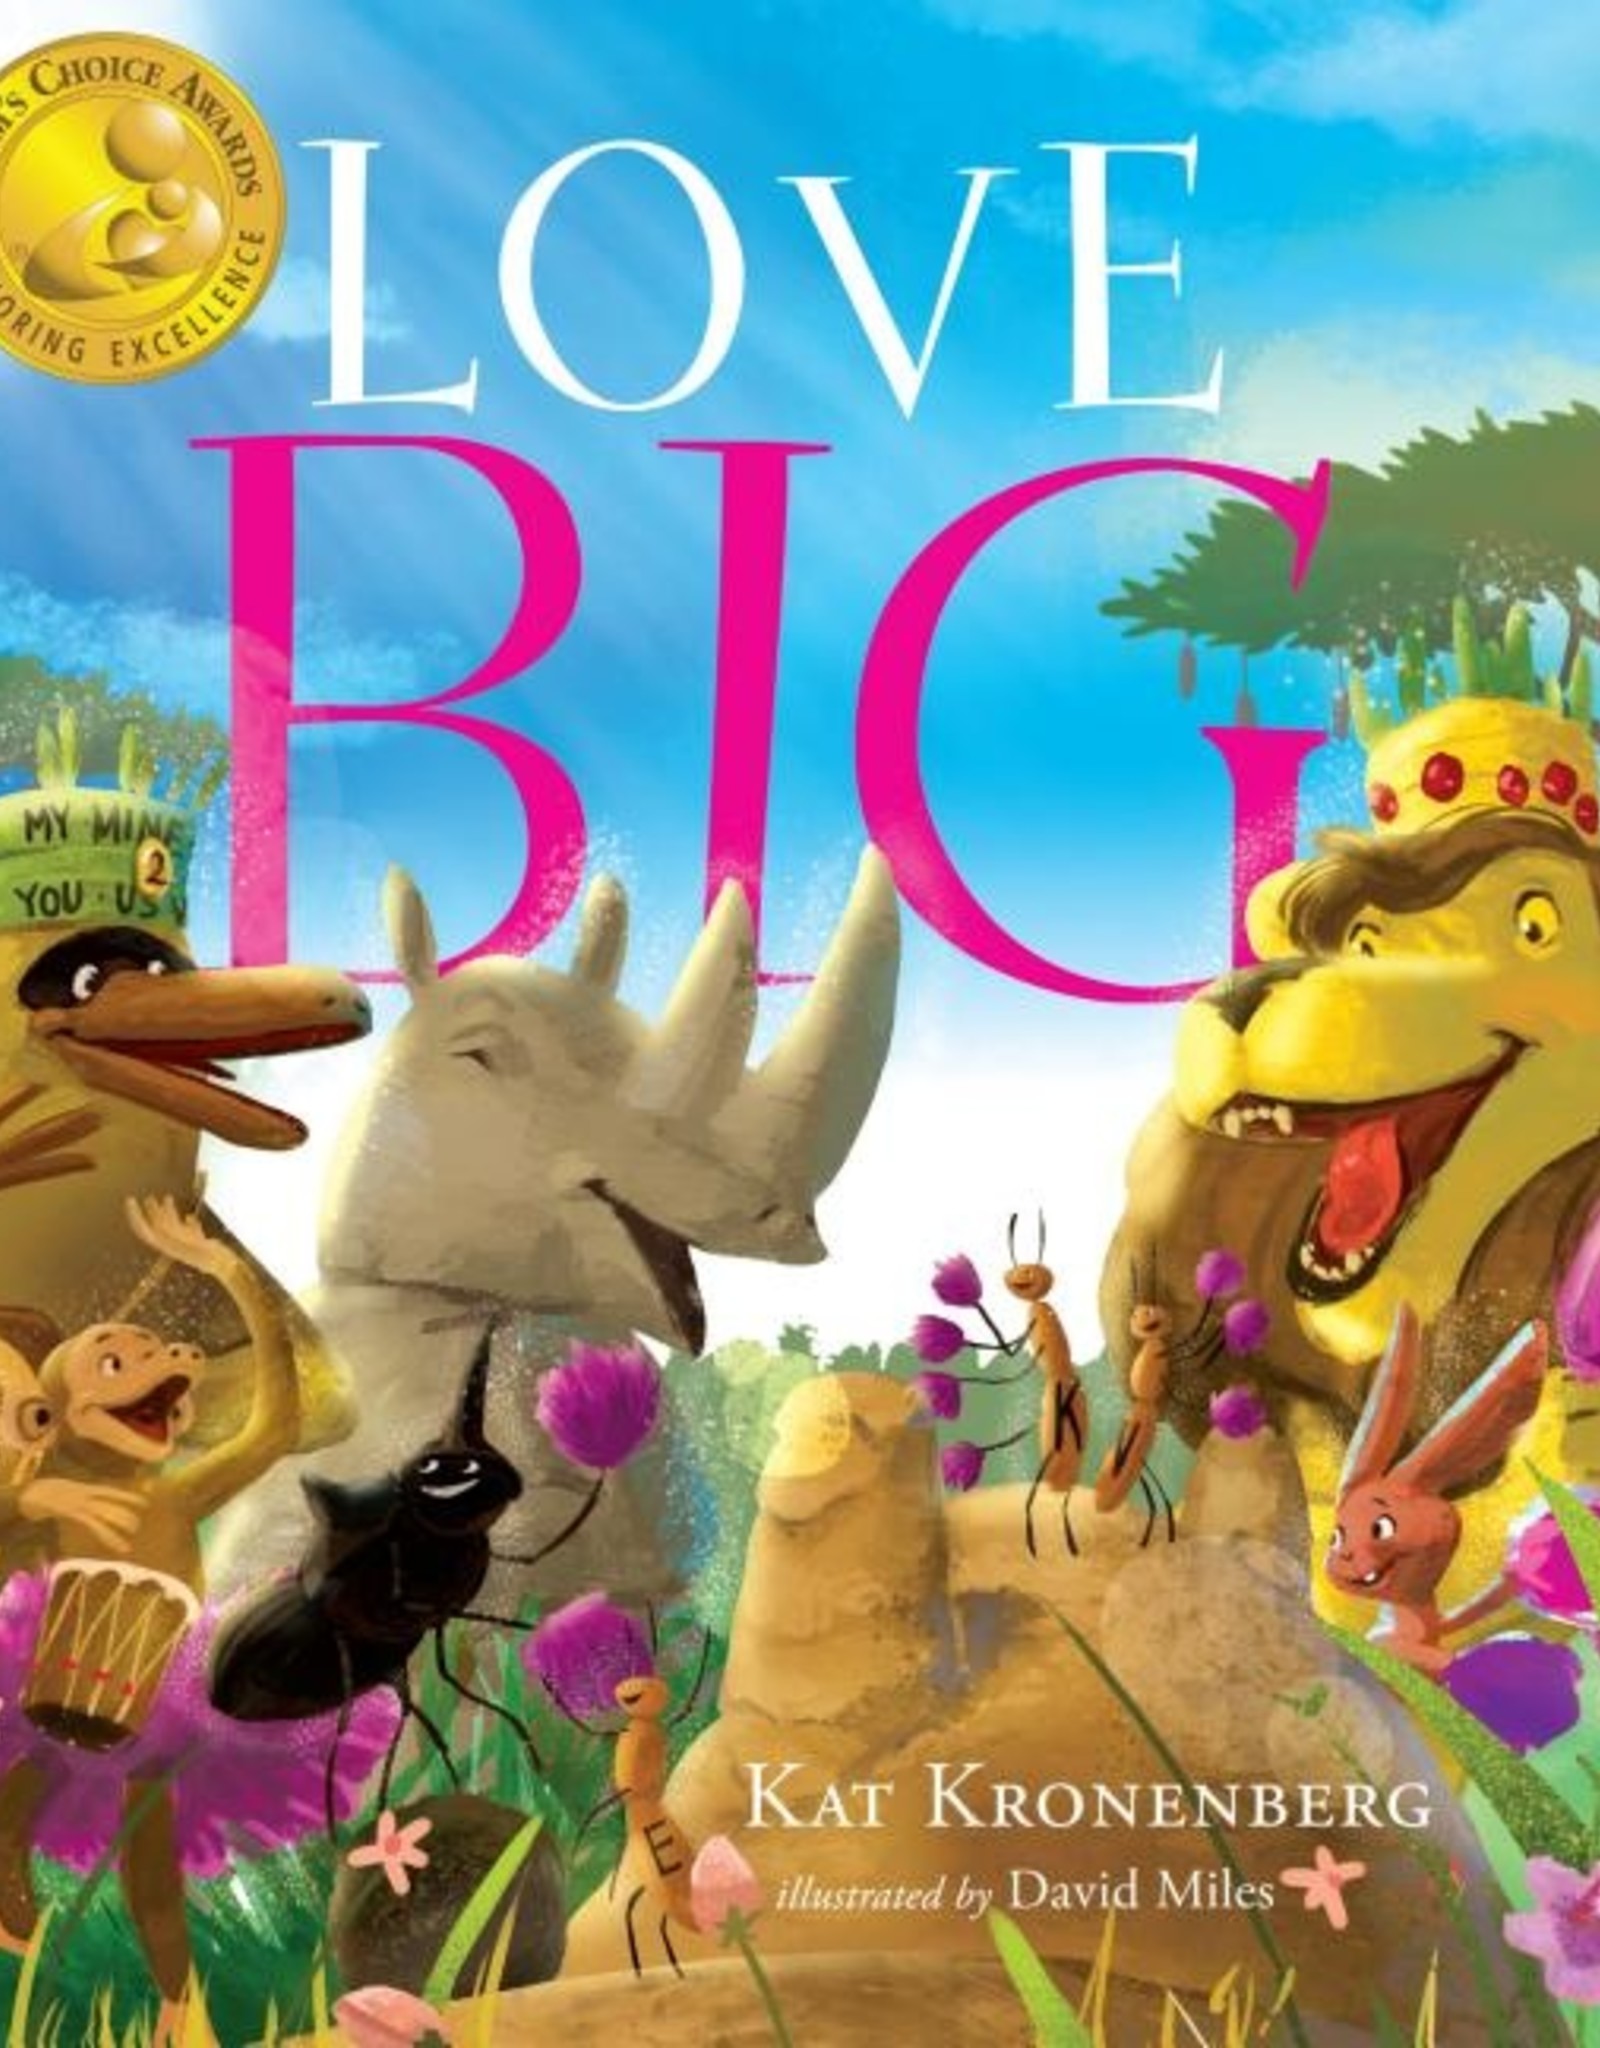 Love Big / Kat Kronenberg